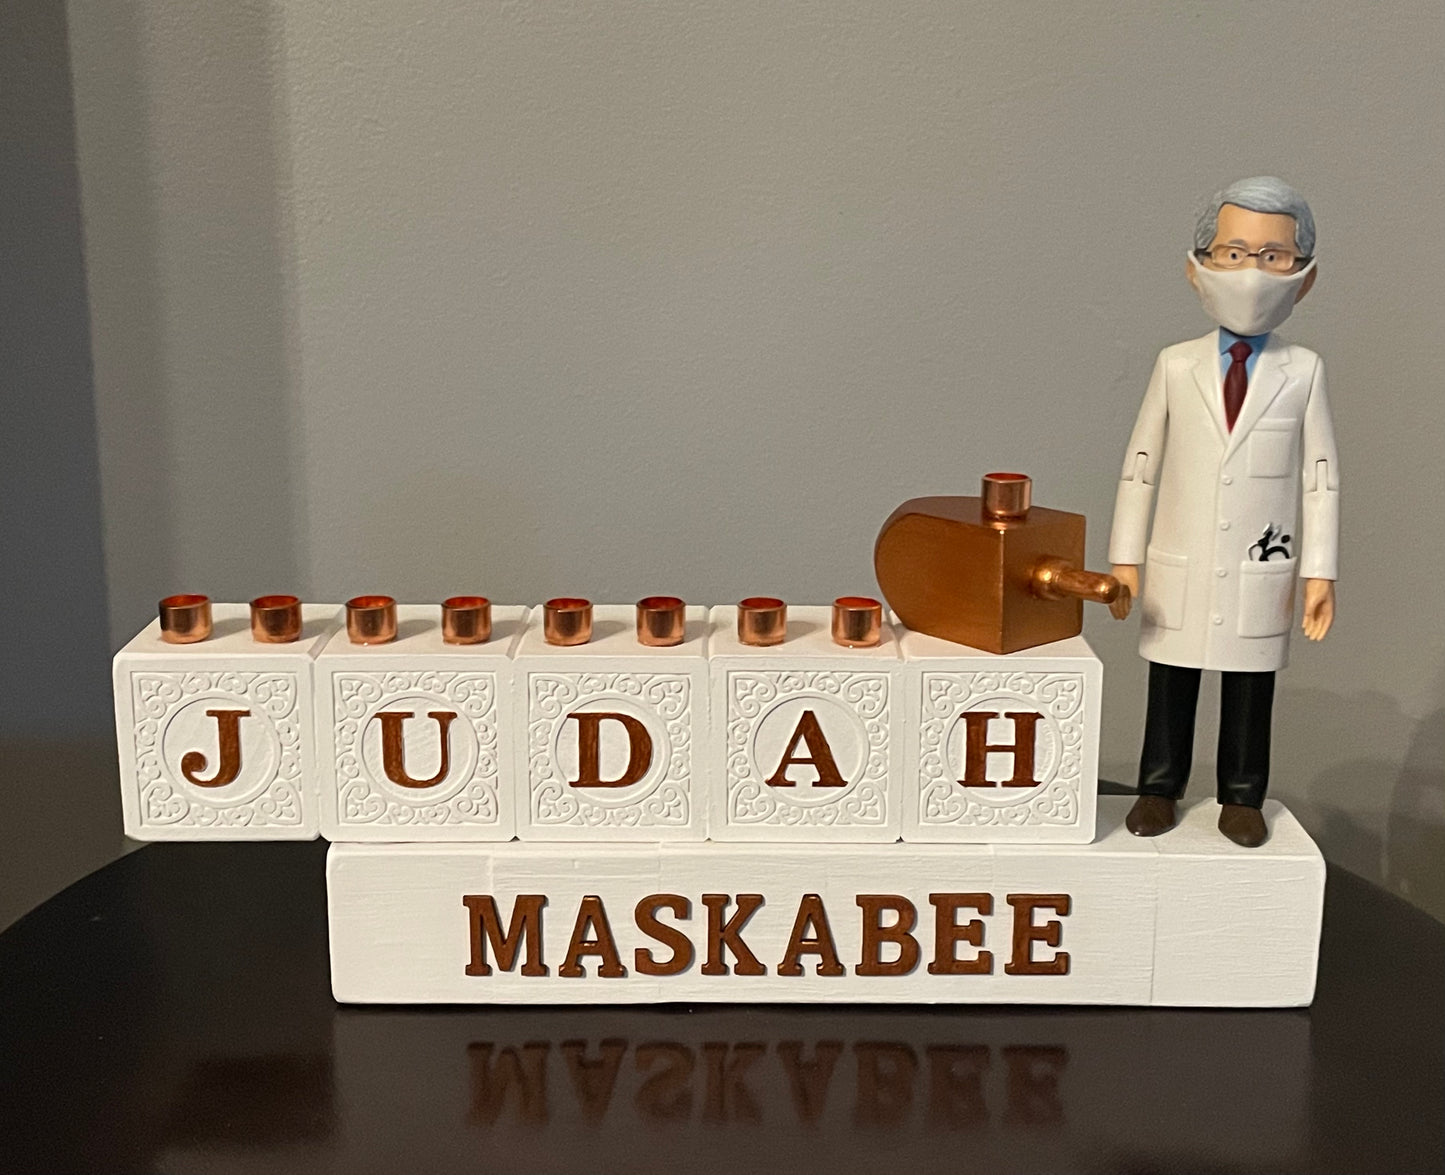 Judah Maskabee Menorah